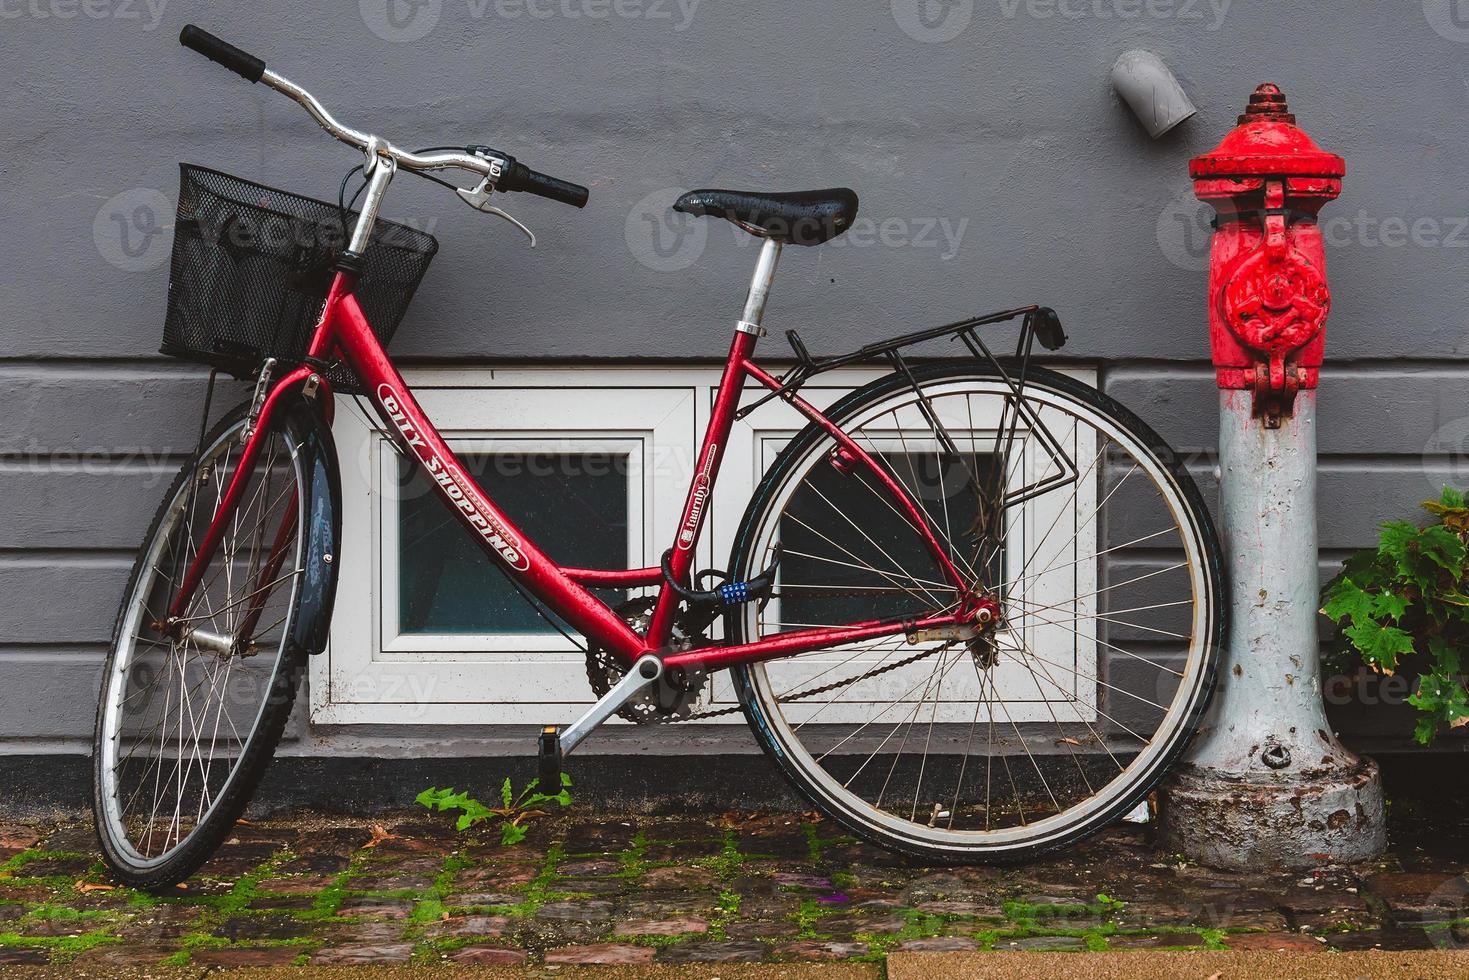 bicicleta roja con balde cerca de la bomba contra incendios foto